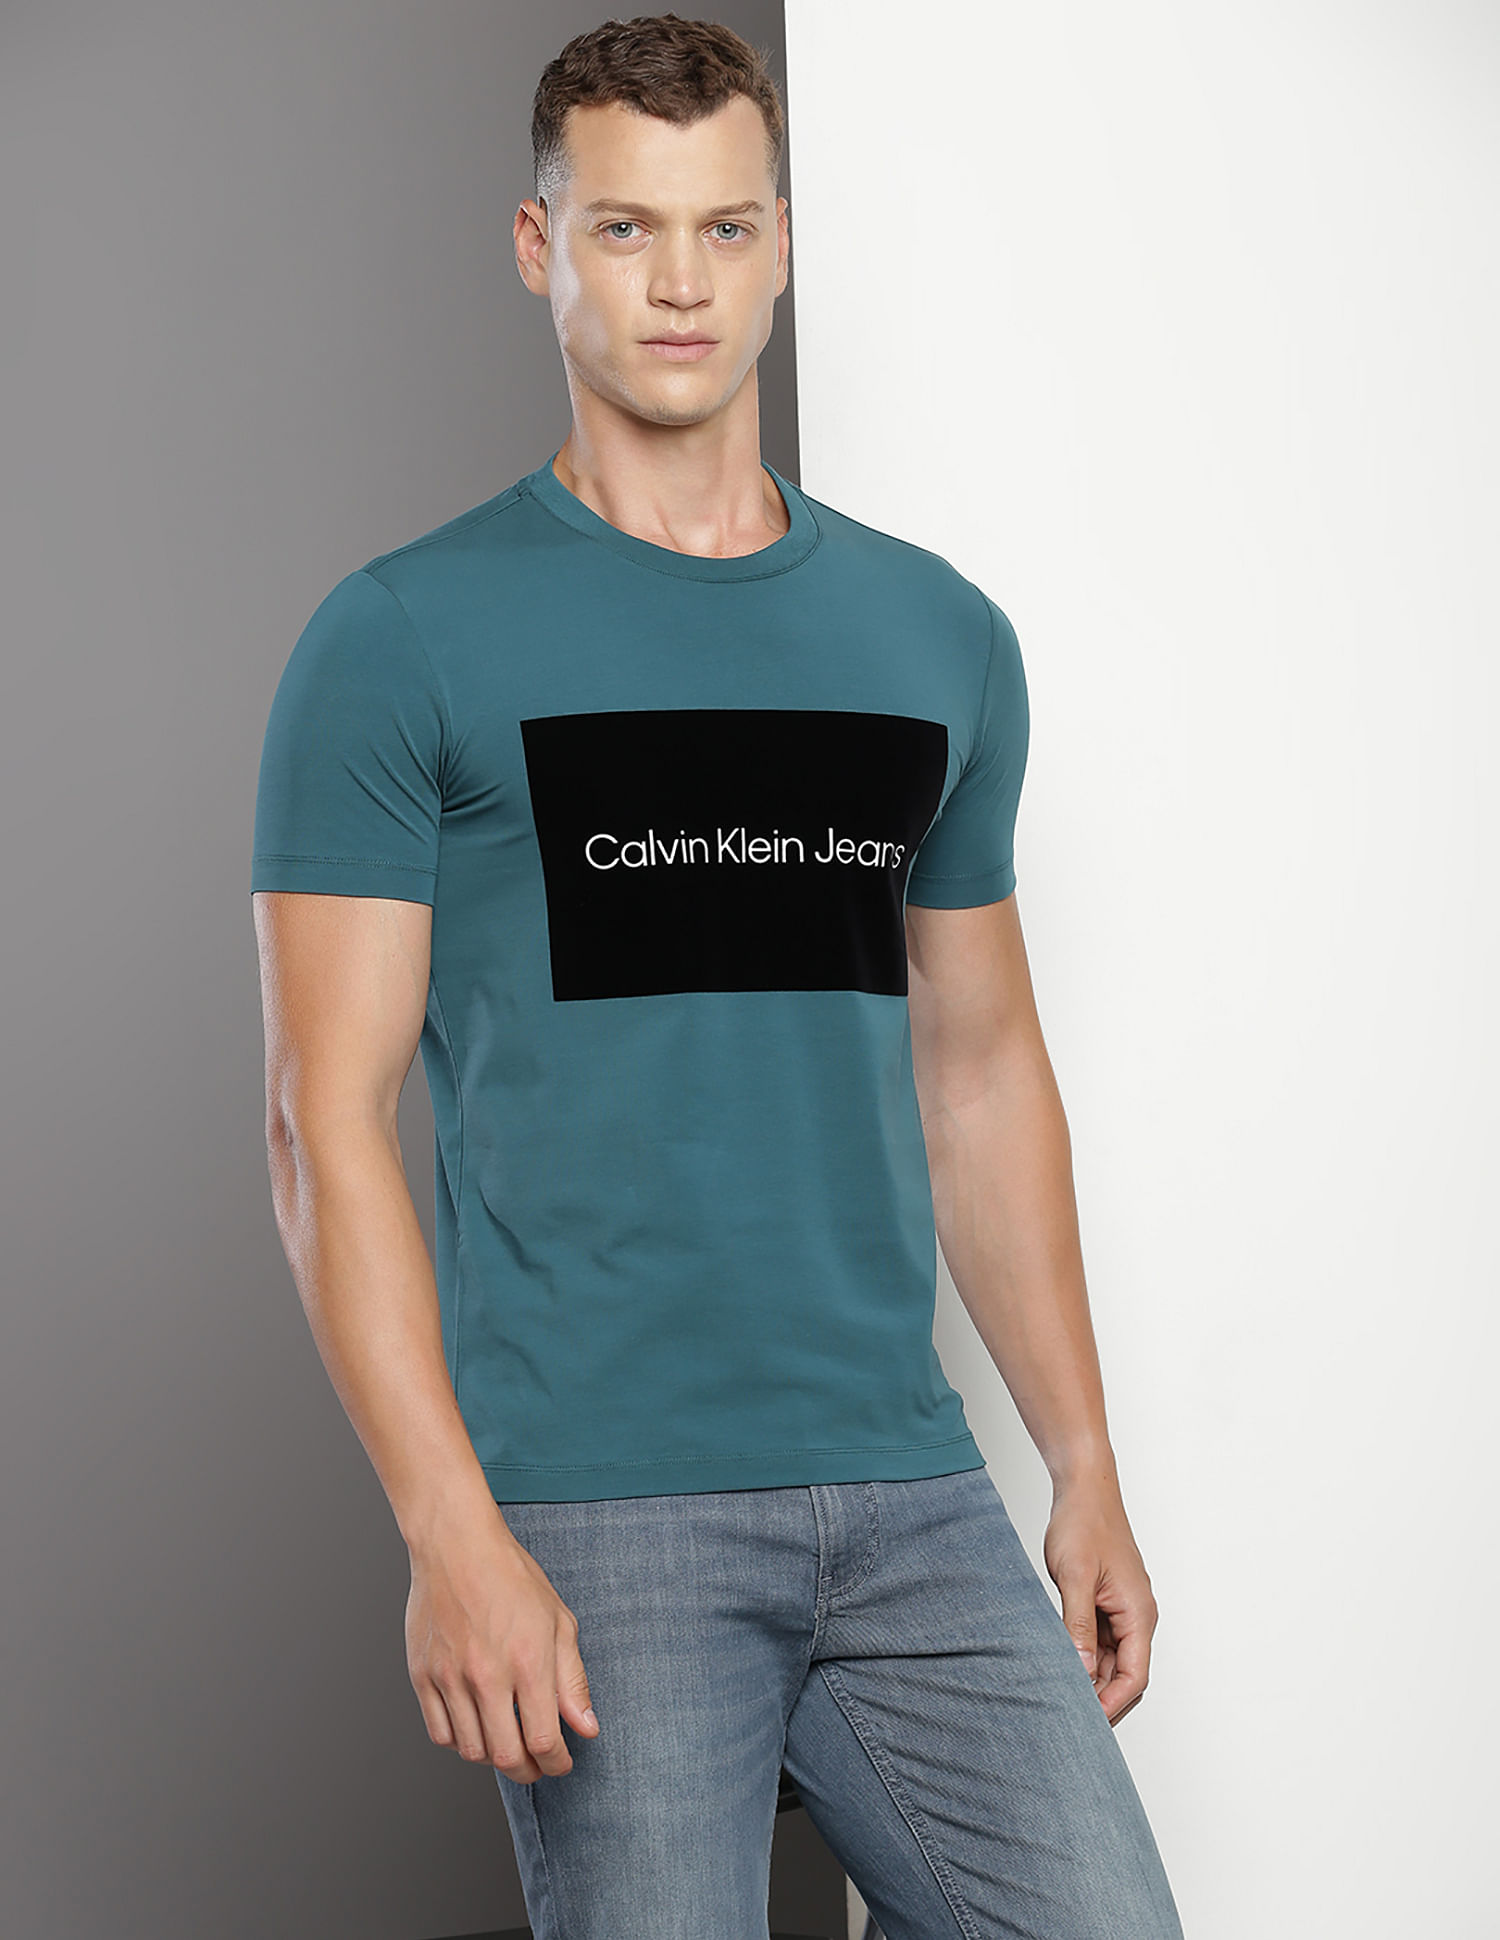 Buy Calvin Klein Jeans Brand Print Slim Fit T-Shirt - NNNOW.com